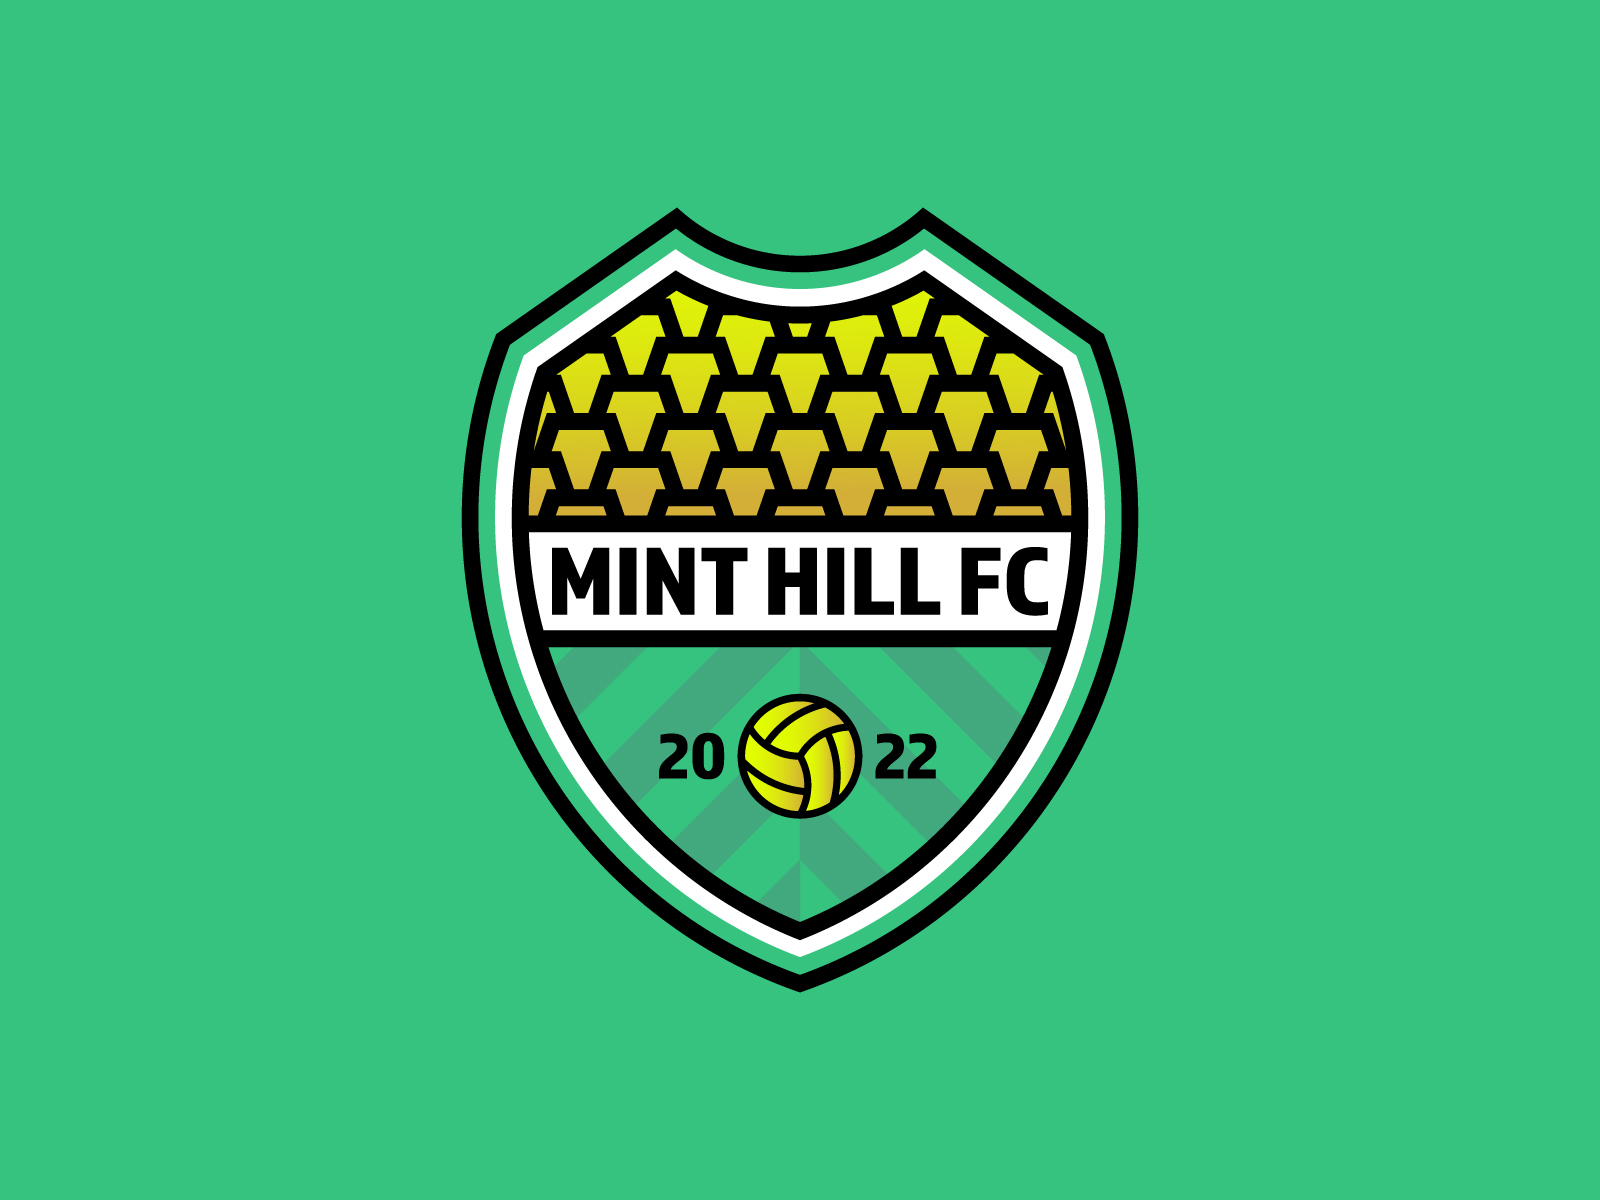 Mint Hill Football Club by Owen Williams on Dribbble